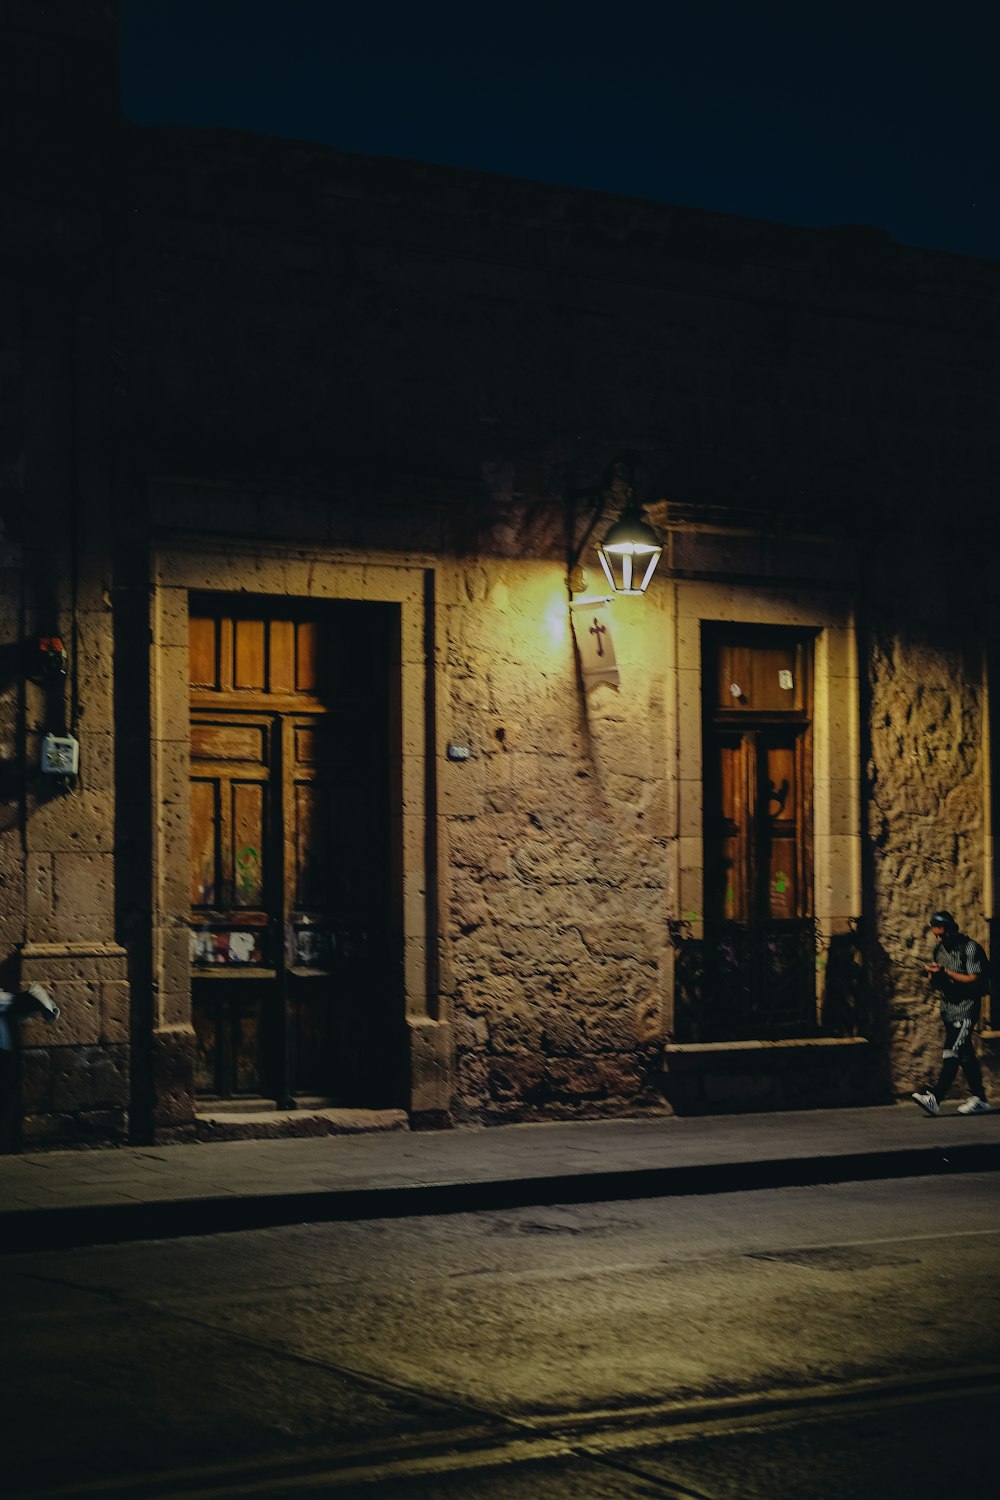 una calle oscura por la noche con un edificio iluminado